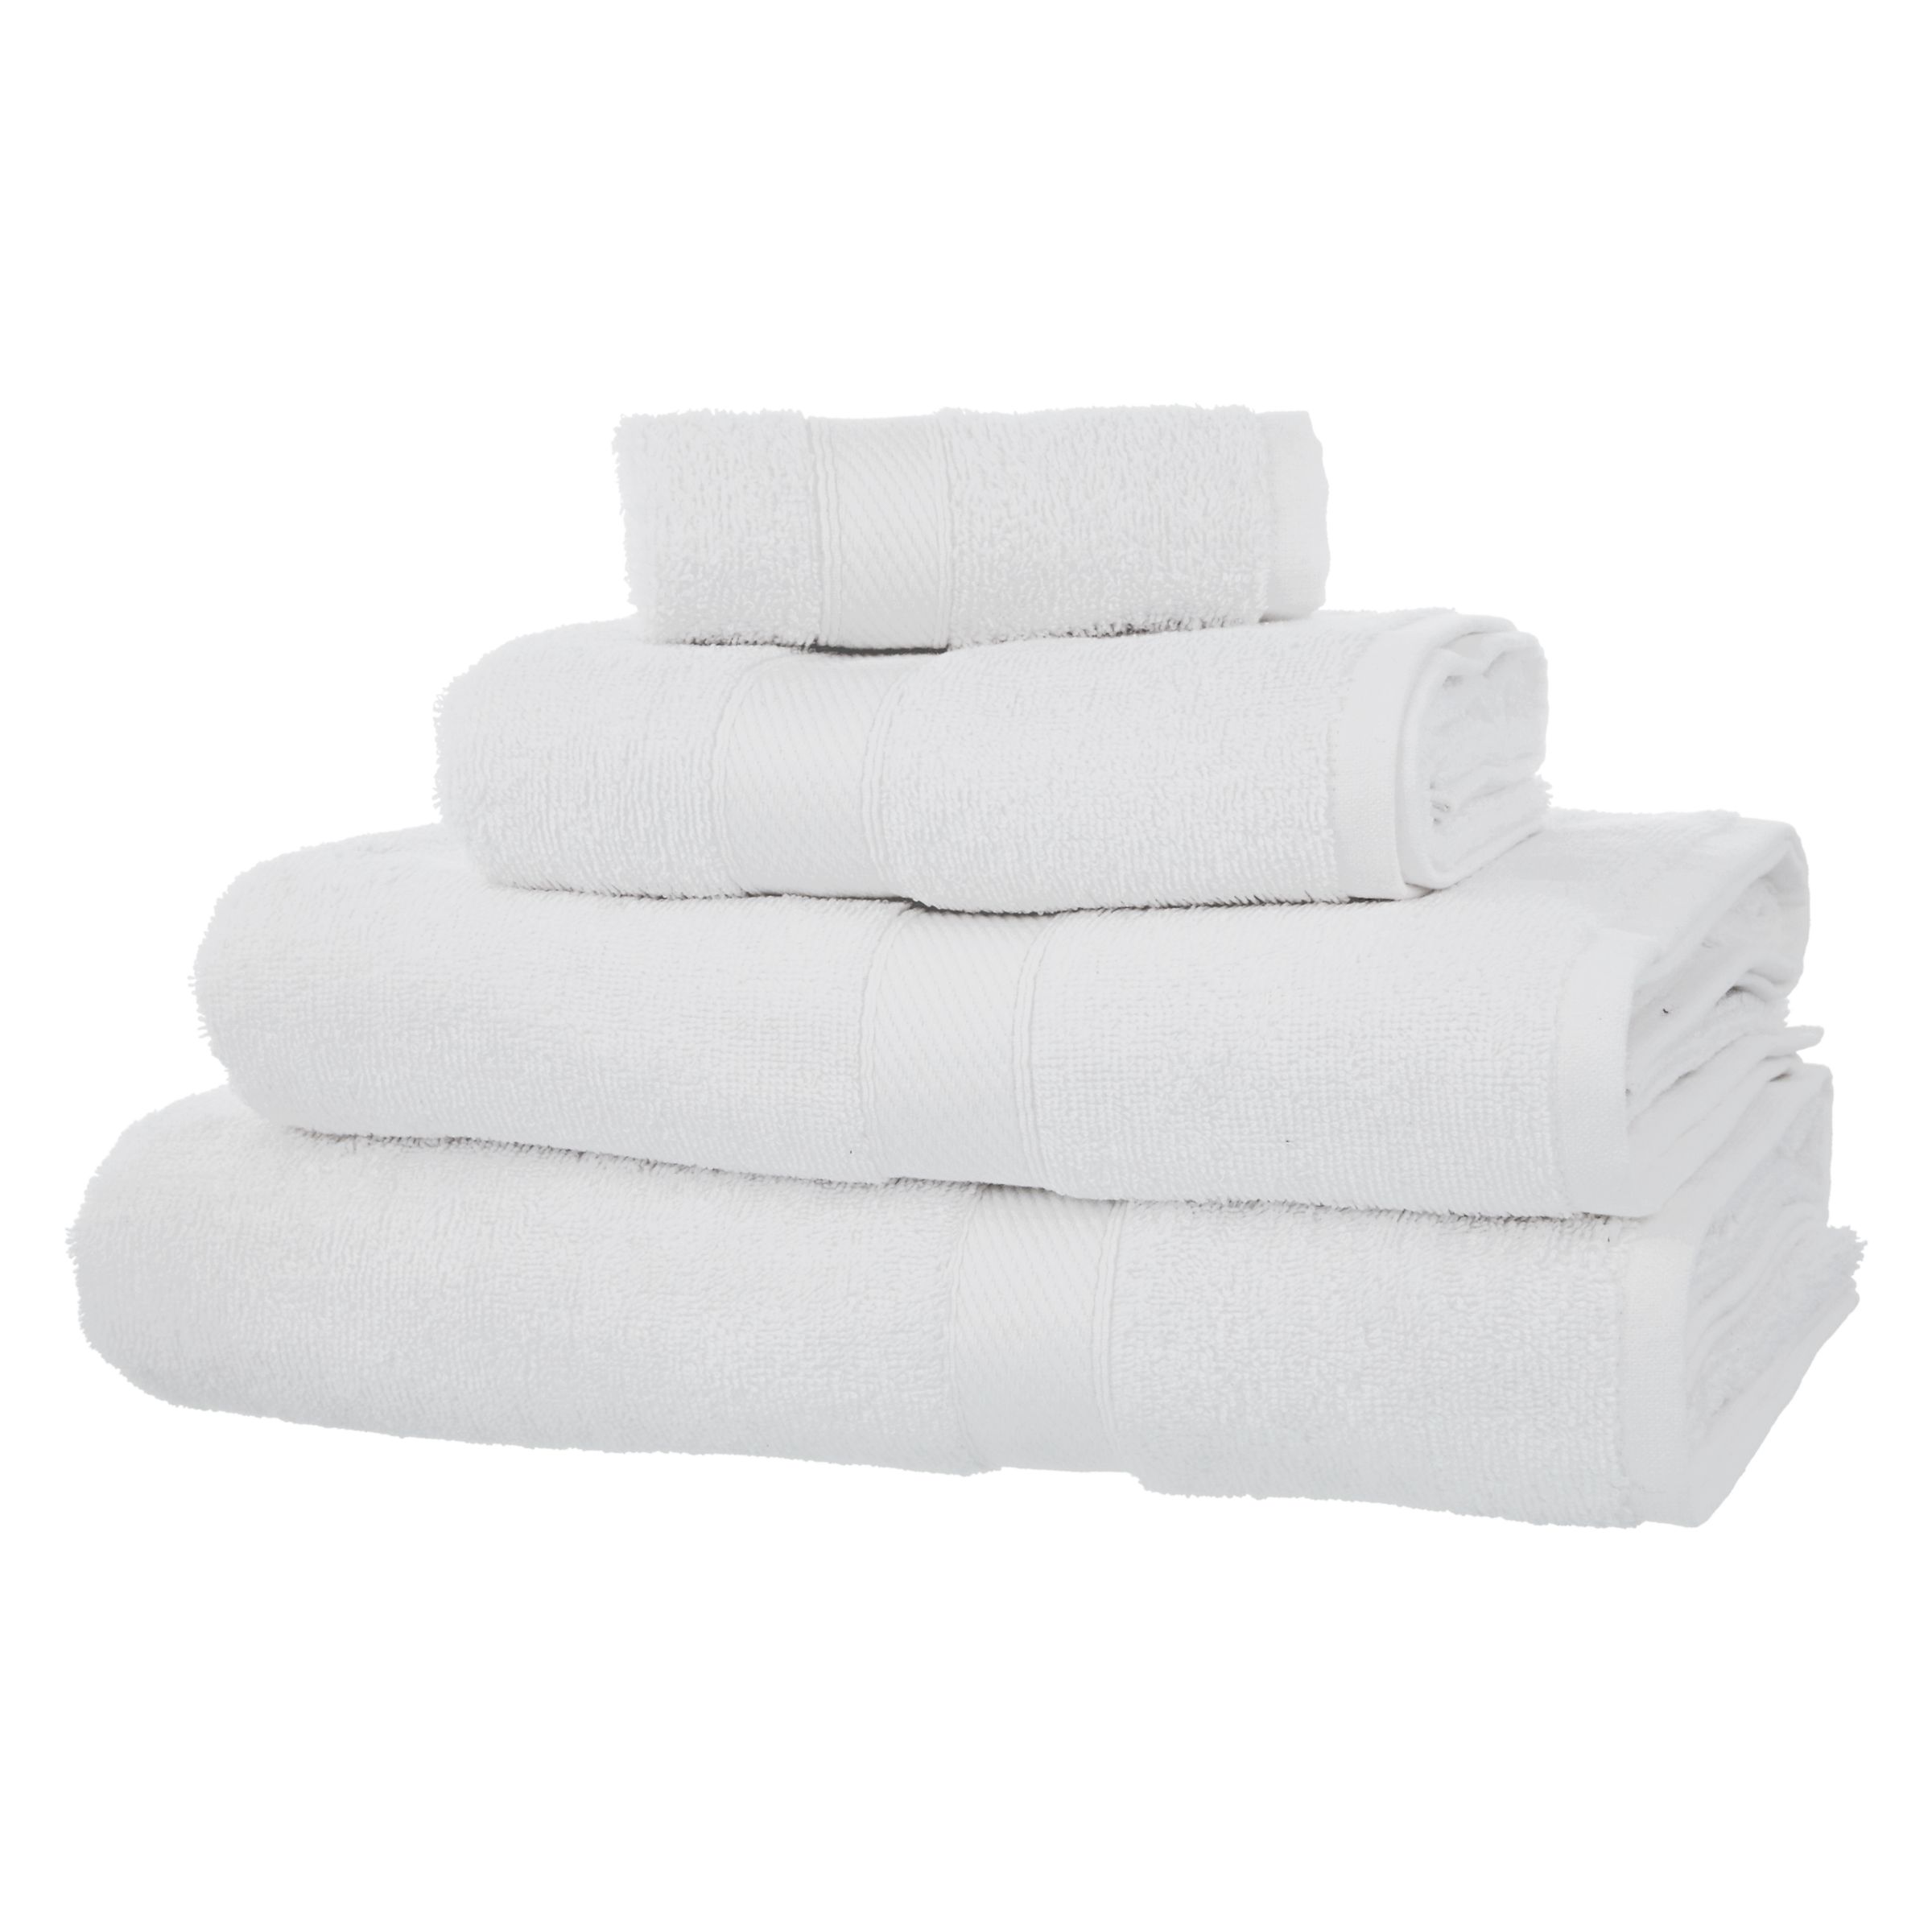 John Lewis & Partners The Basics Bath Towel, White